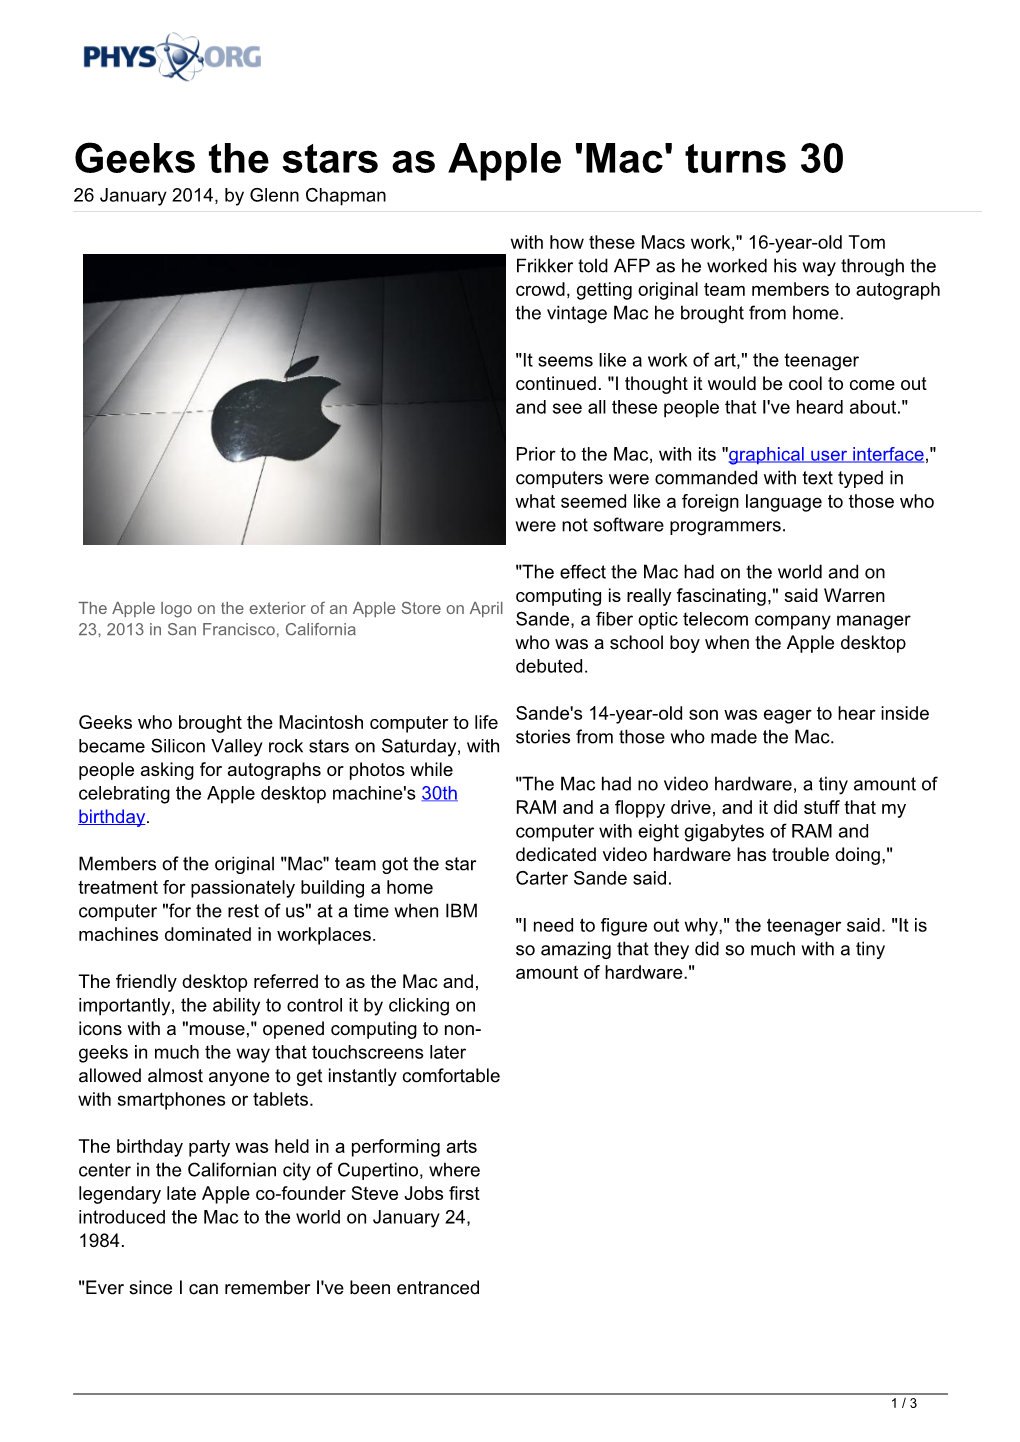 Geeks the Stars As Apple 'Mac' Turns 30 26 January 2014, by Glenn Chapman